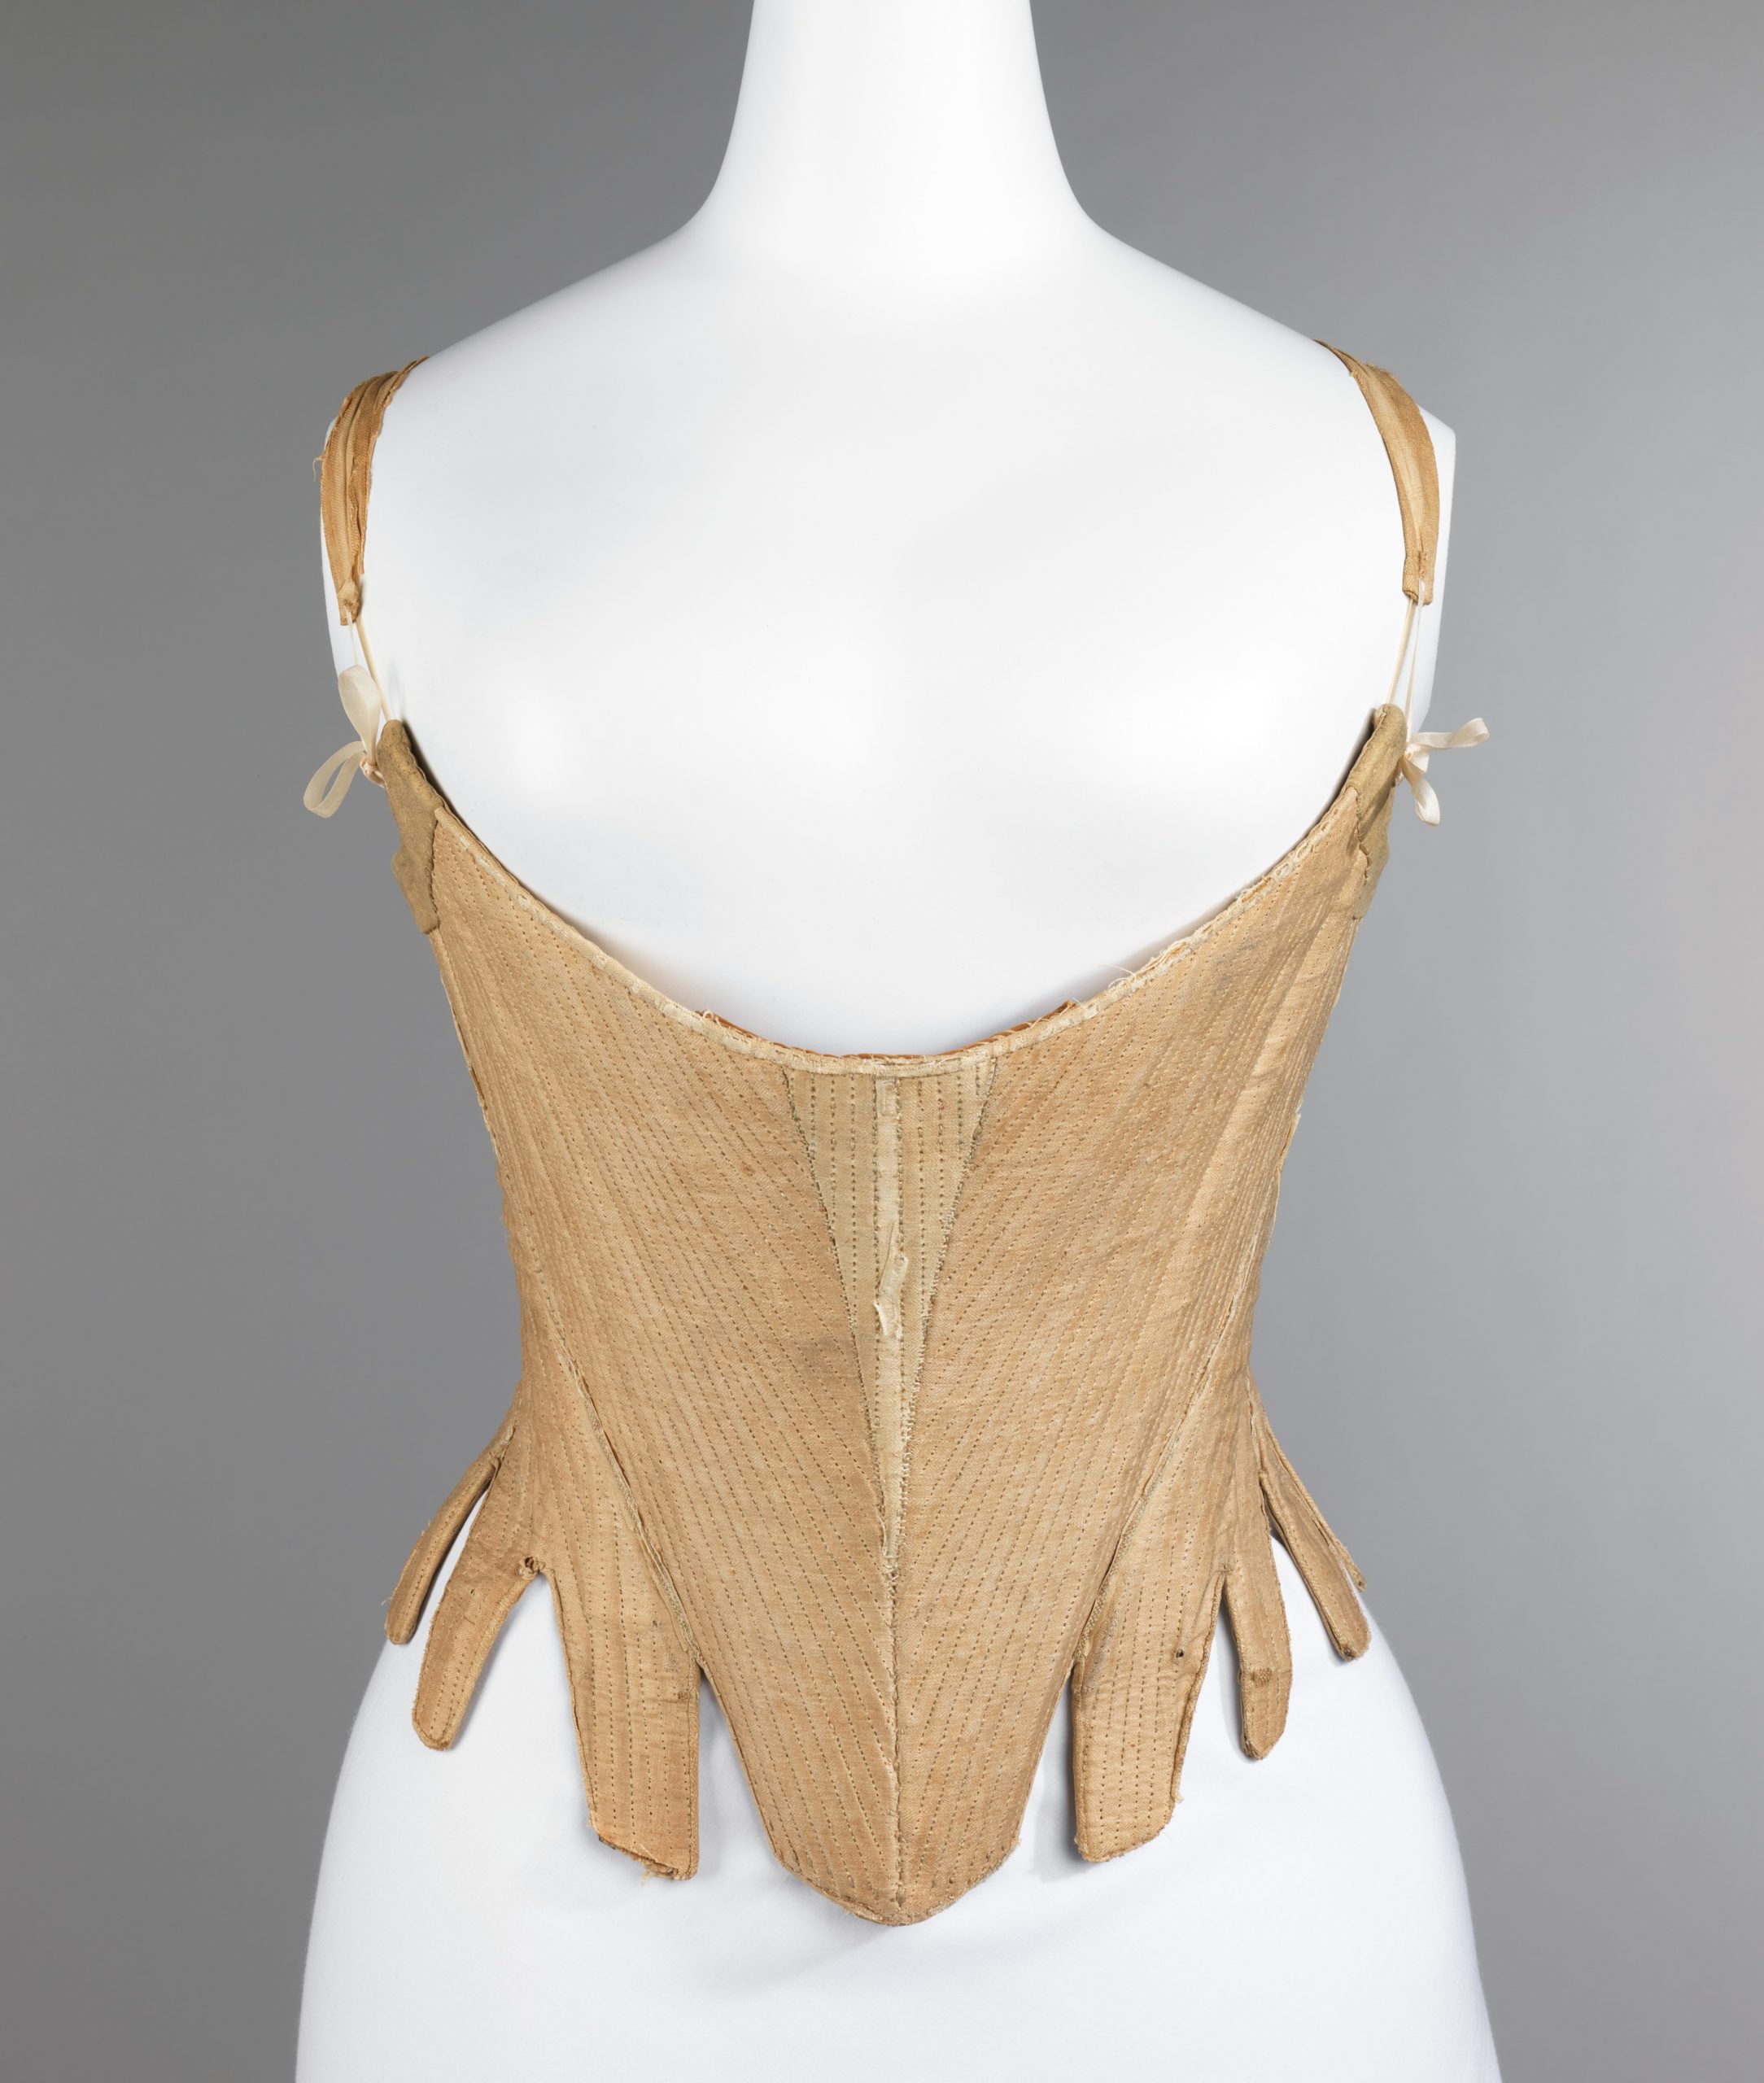 Corset (Stays), 1740–60, American, linen, leather, whalebone